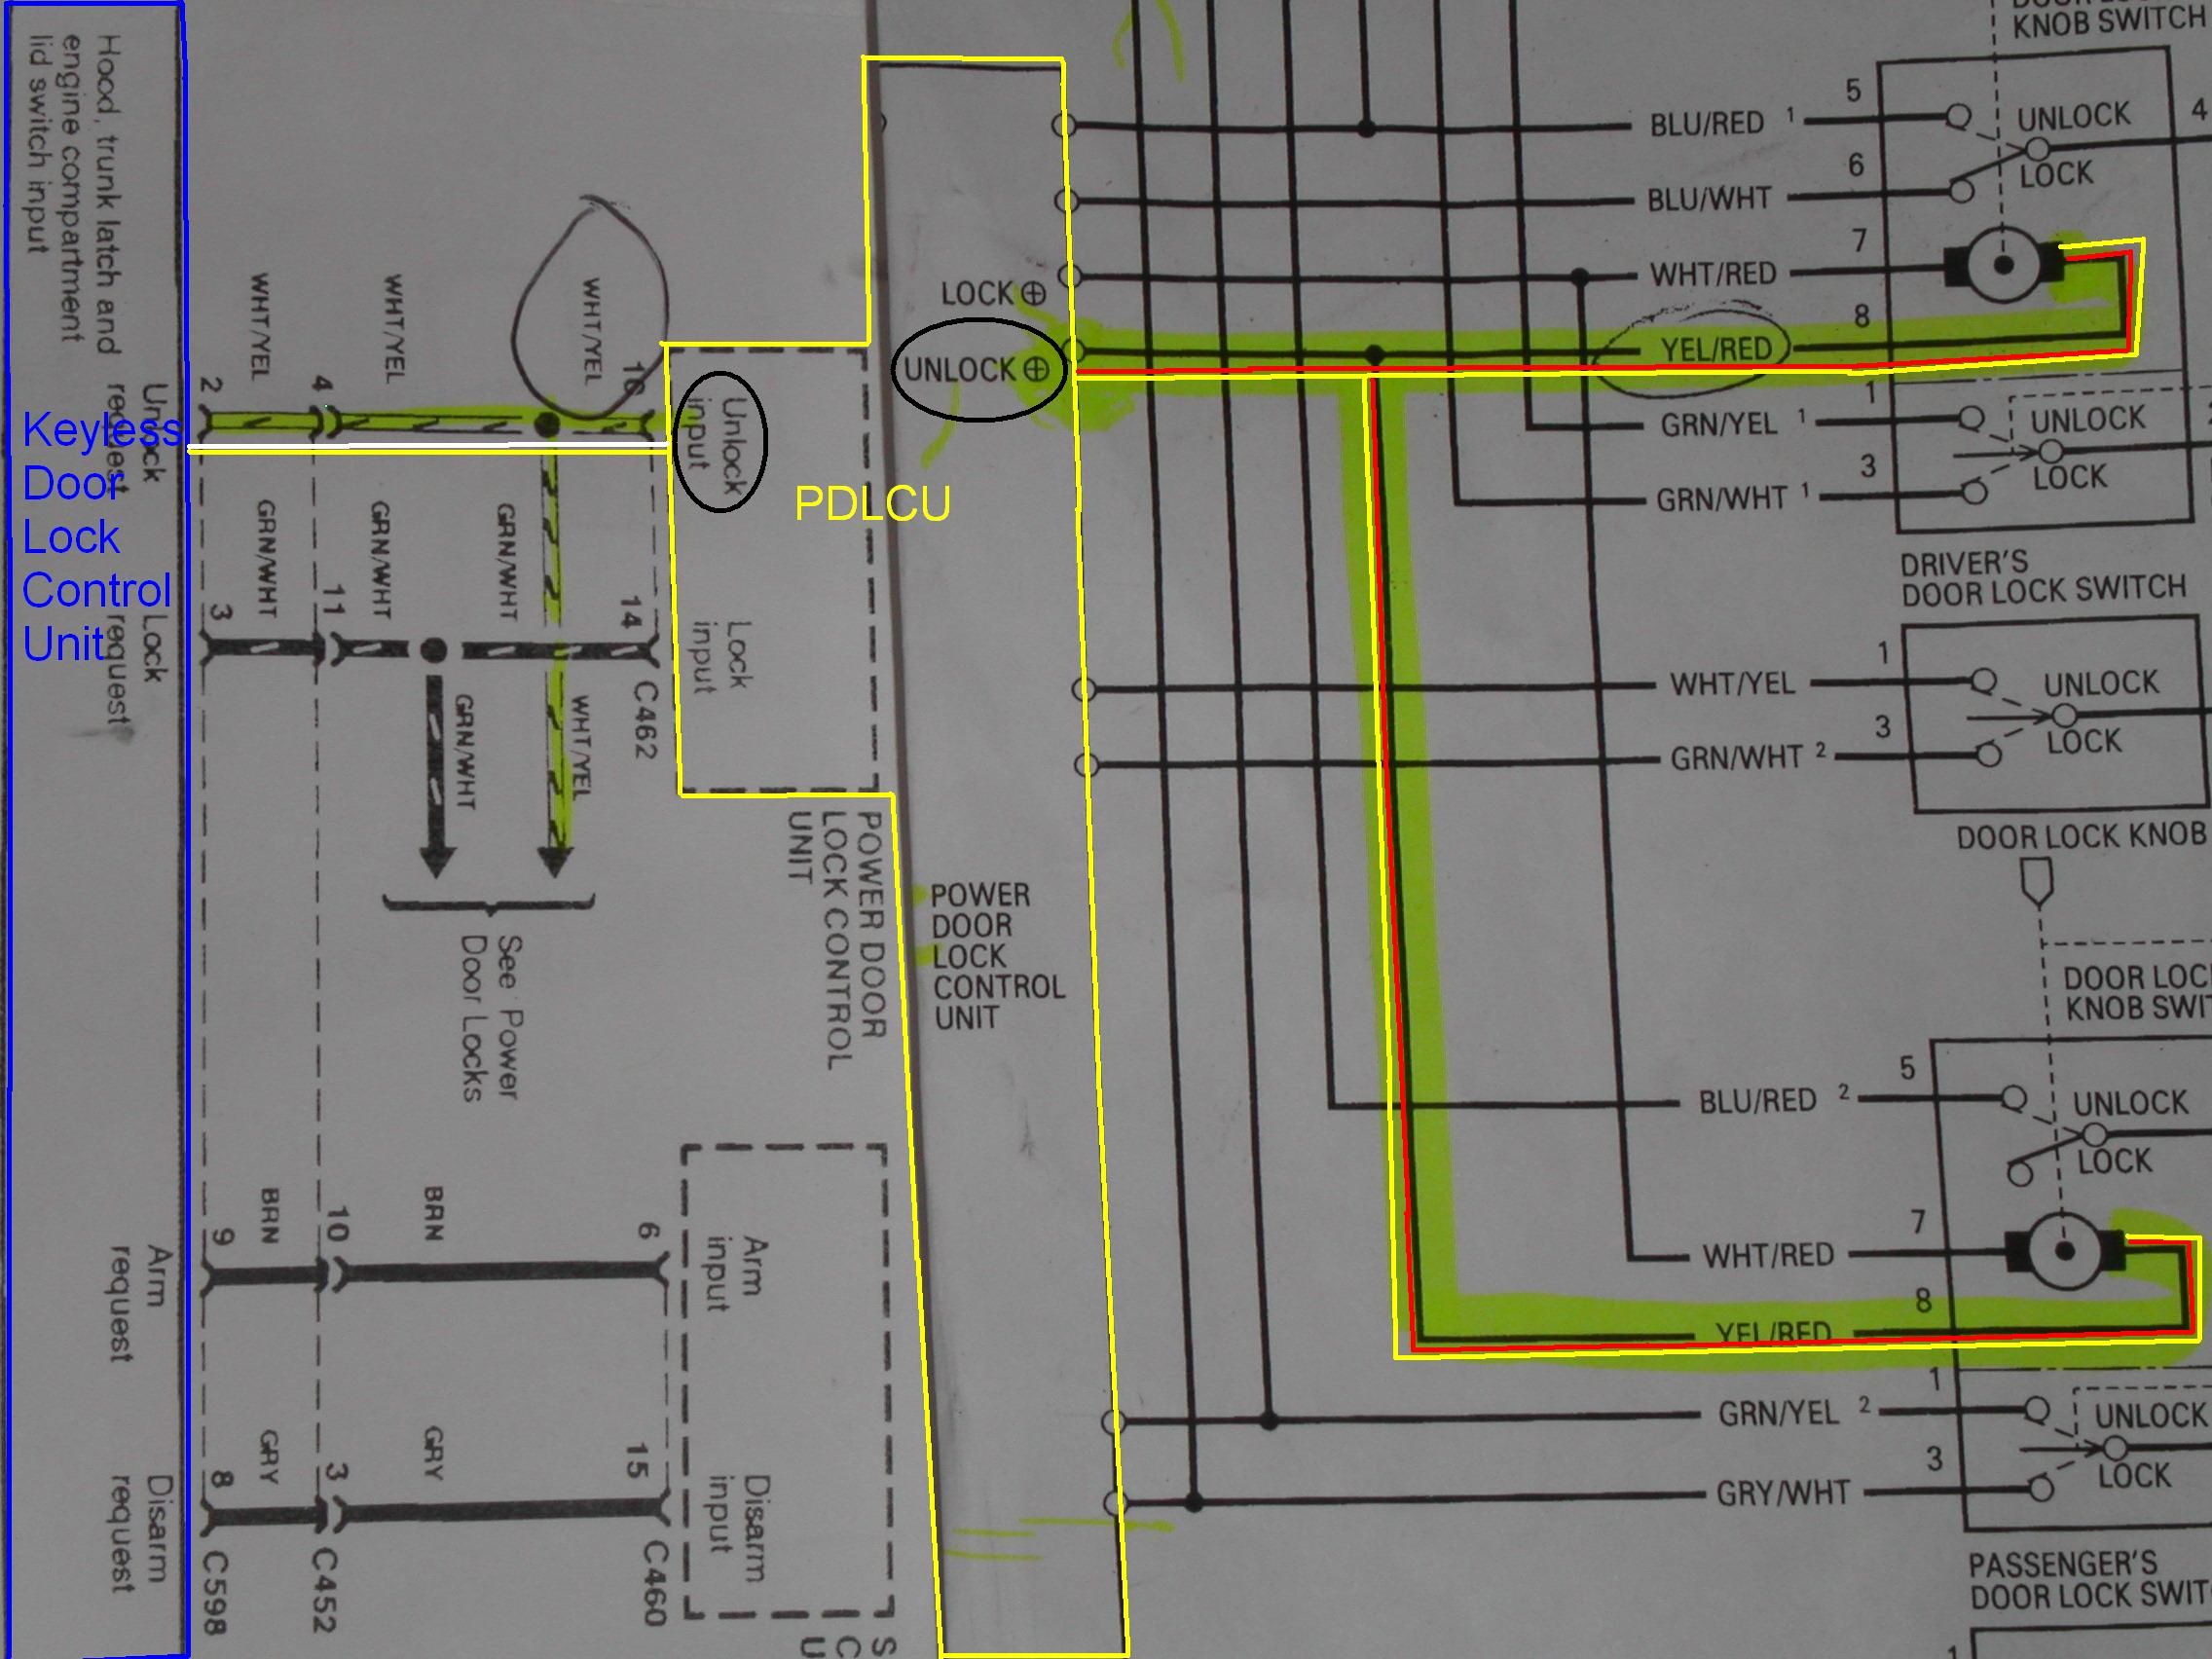 [DIAGRAM] 1999 International Wiring Diagram FULL Version HD Quality